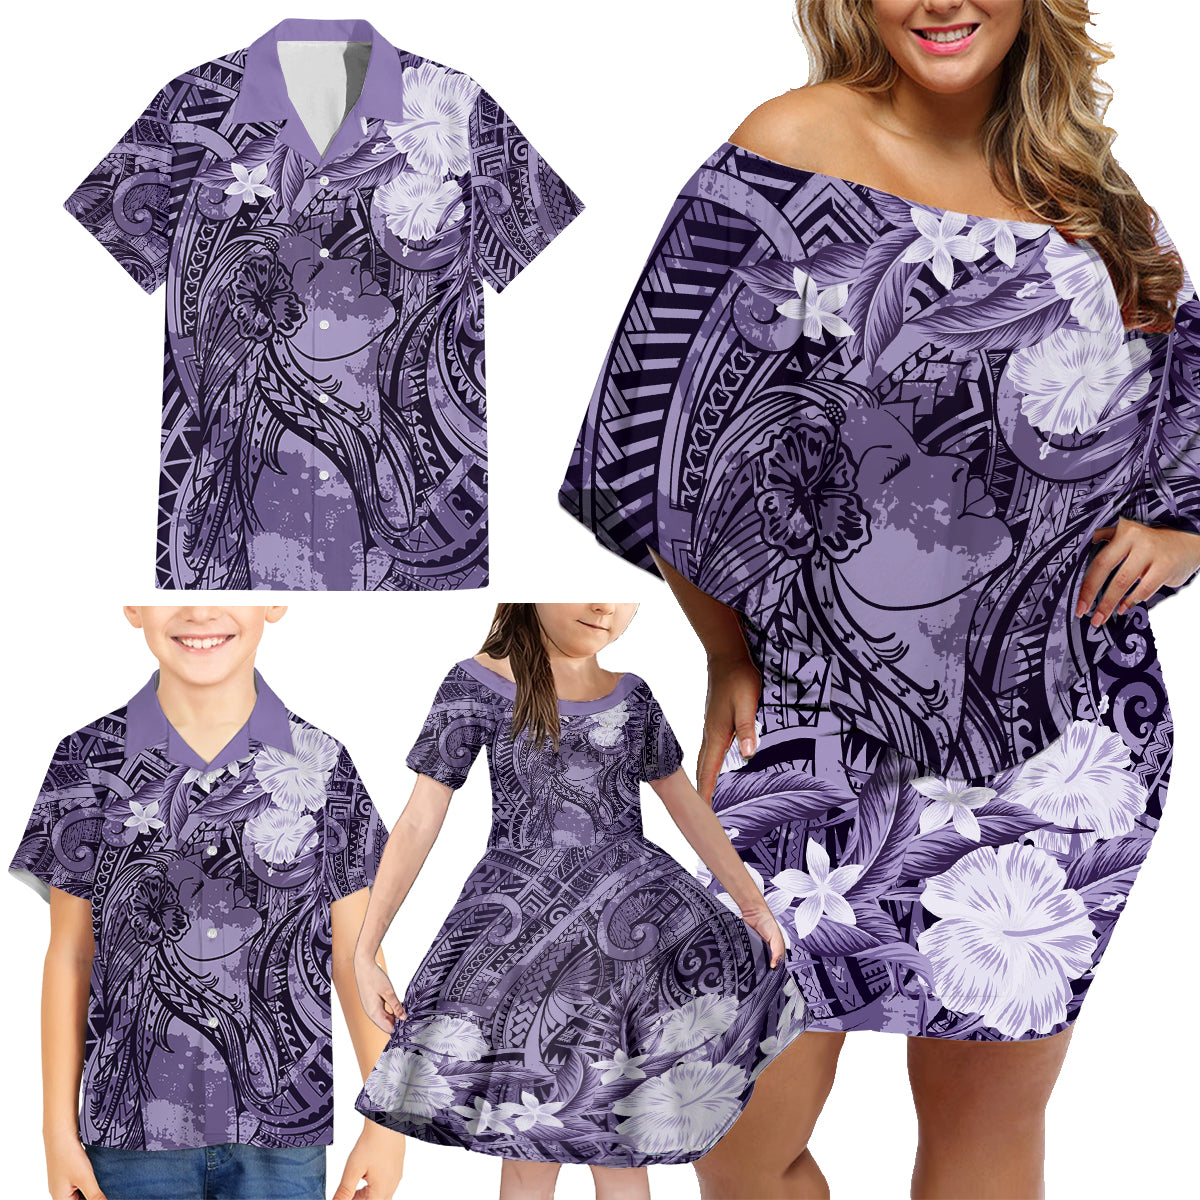 Pacific Beauty Girl Family Matching Off Shoulder Short Dress and Hawaiian Shirt Violet Polyneisan Tribal Vintage Motif